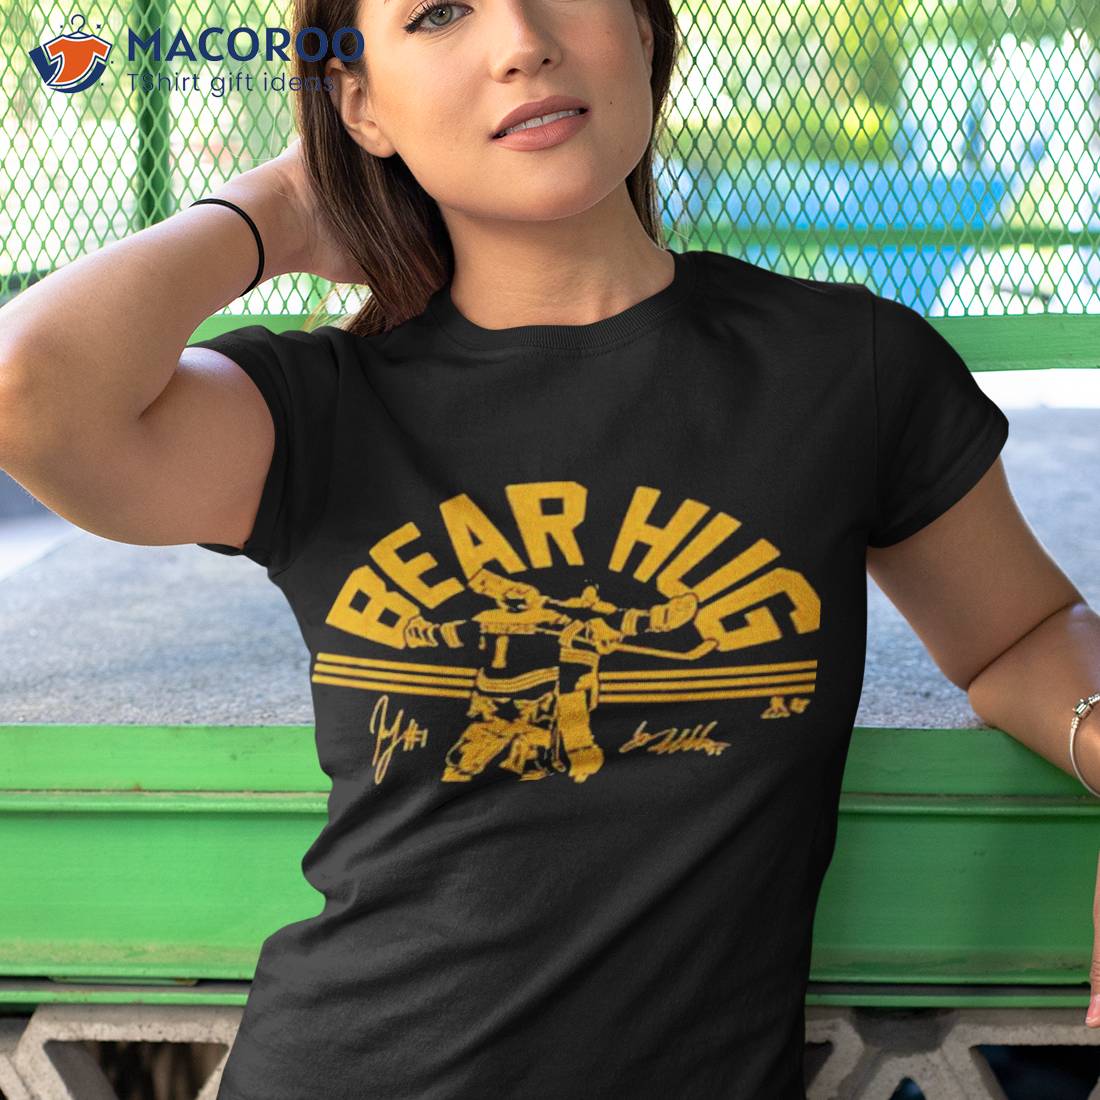 Boston Bruins Goalie Bear Hug | Essential T-Shirt